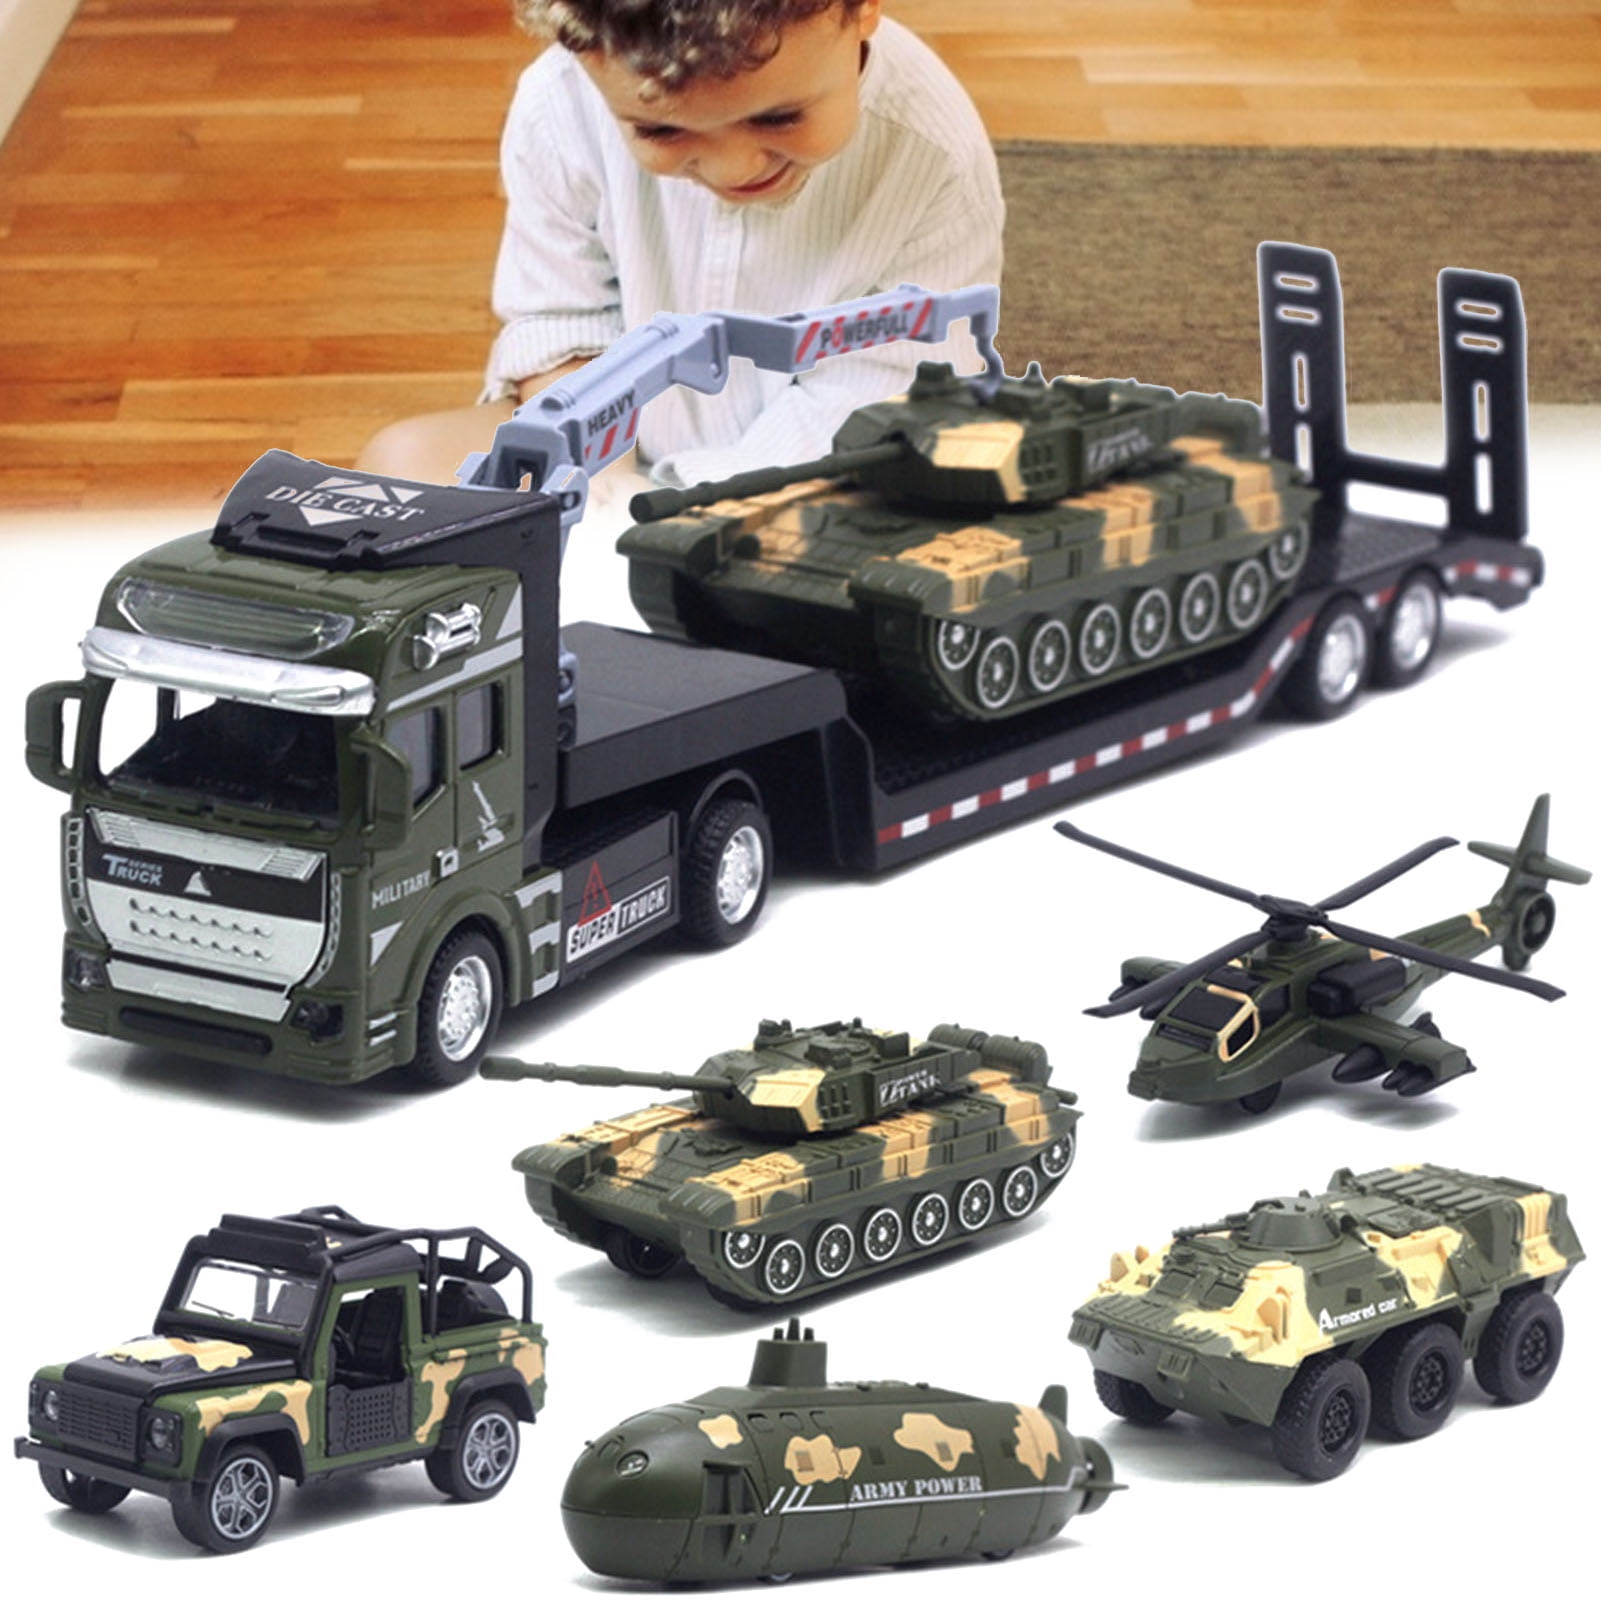 Details about   1061PCS Tank Toys Mini figures Vehicle Aircraft Boy Educational Building Blocks